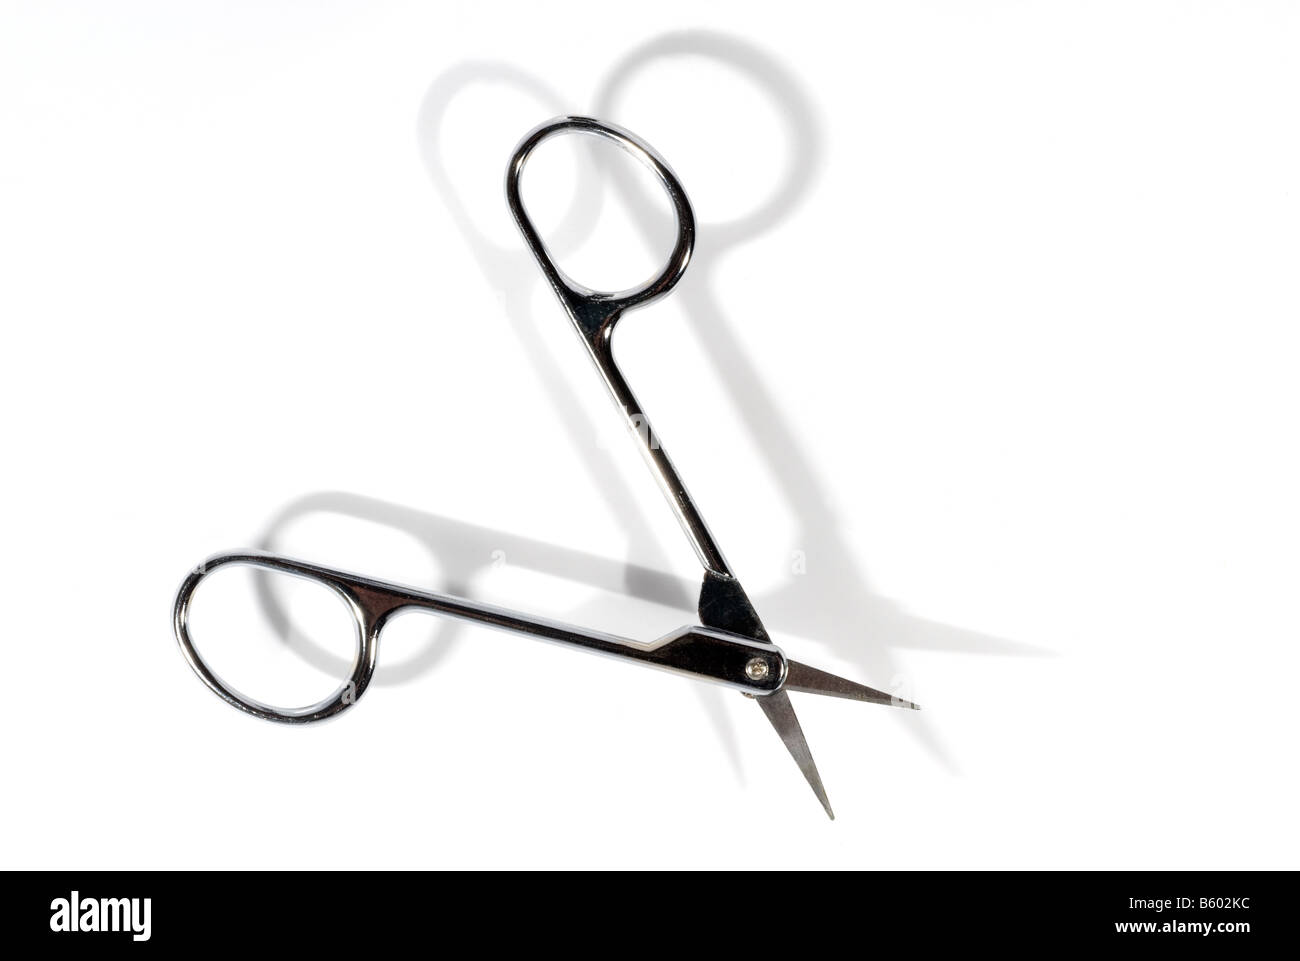 Manicure scissors Stock Photo